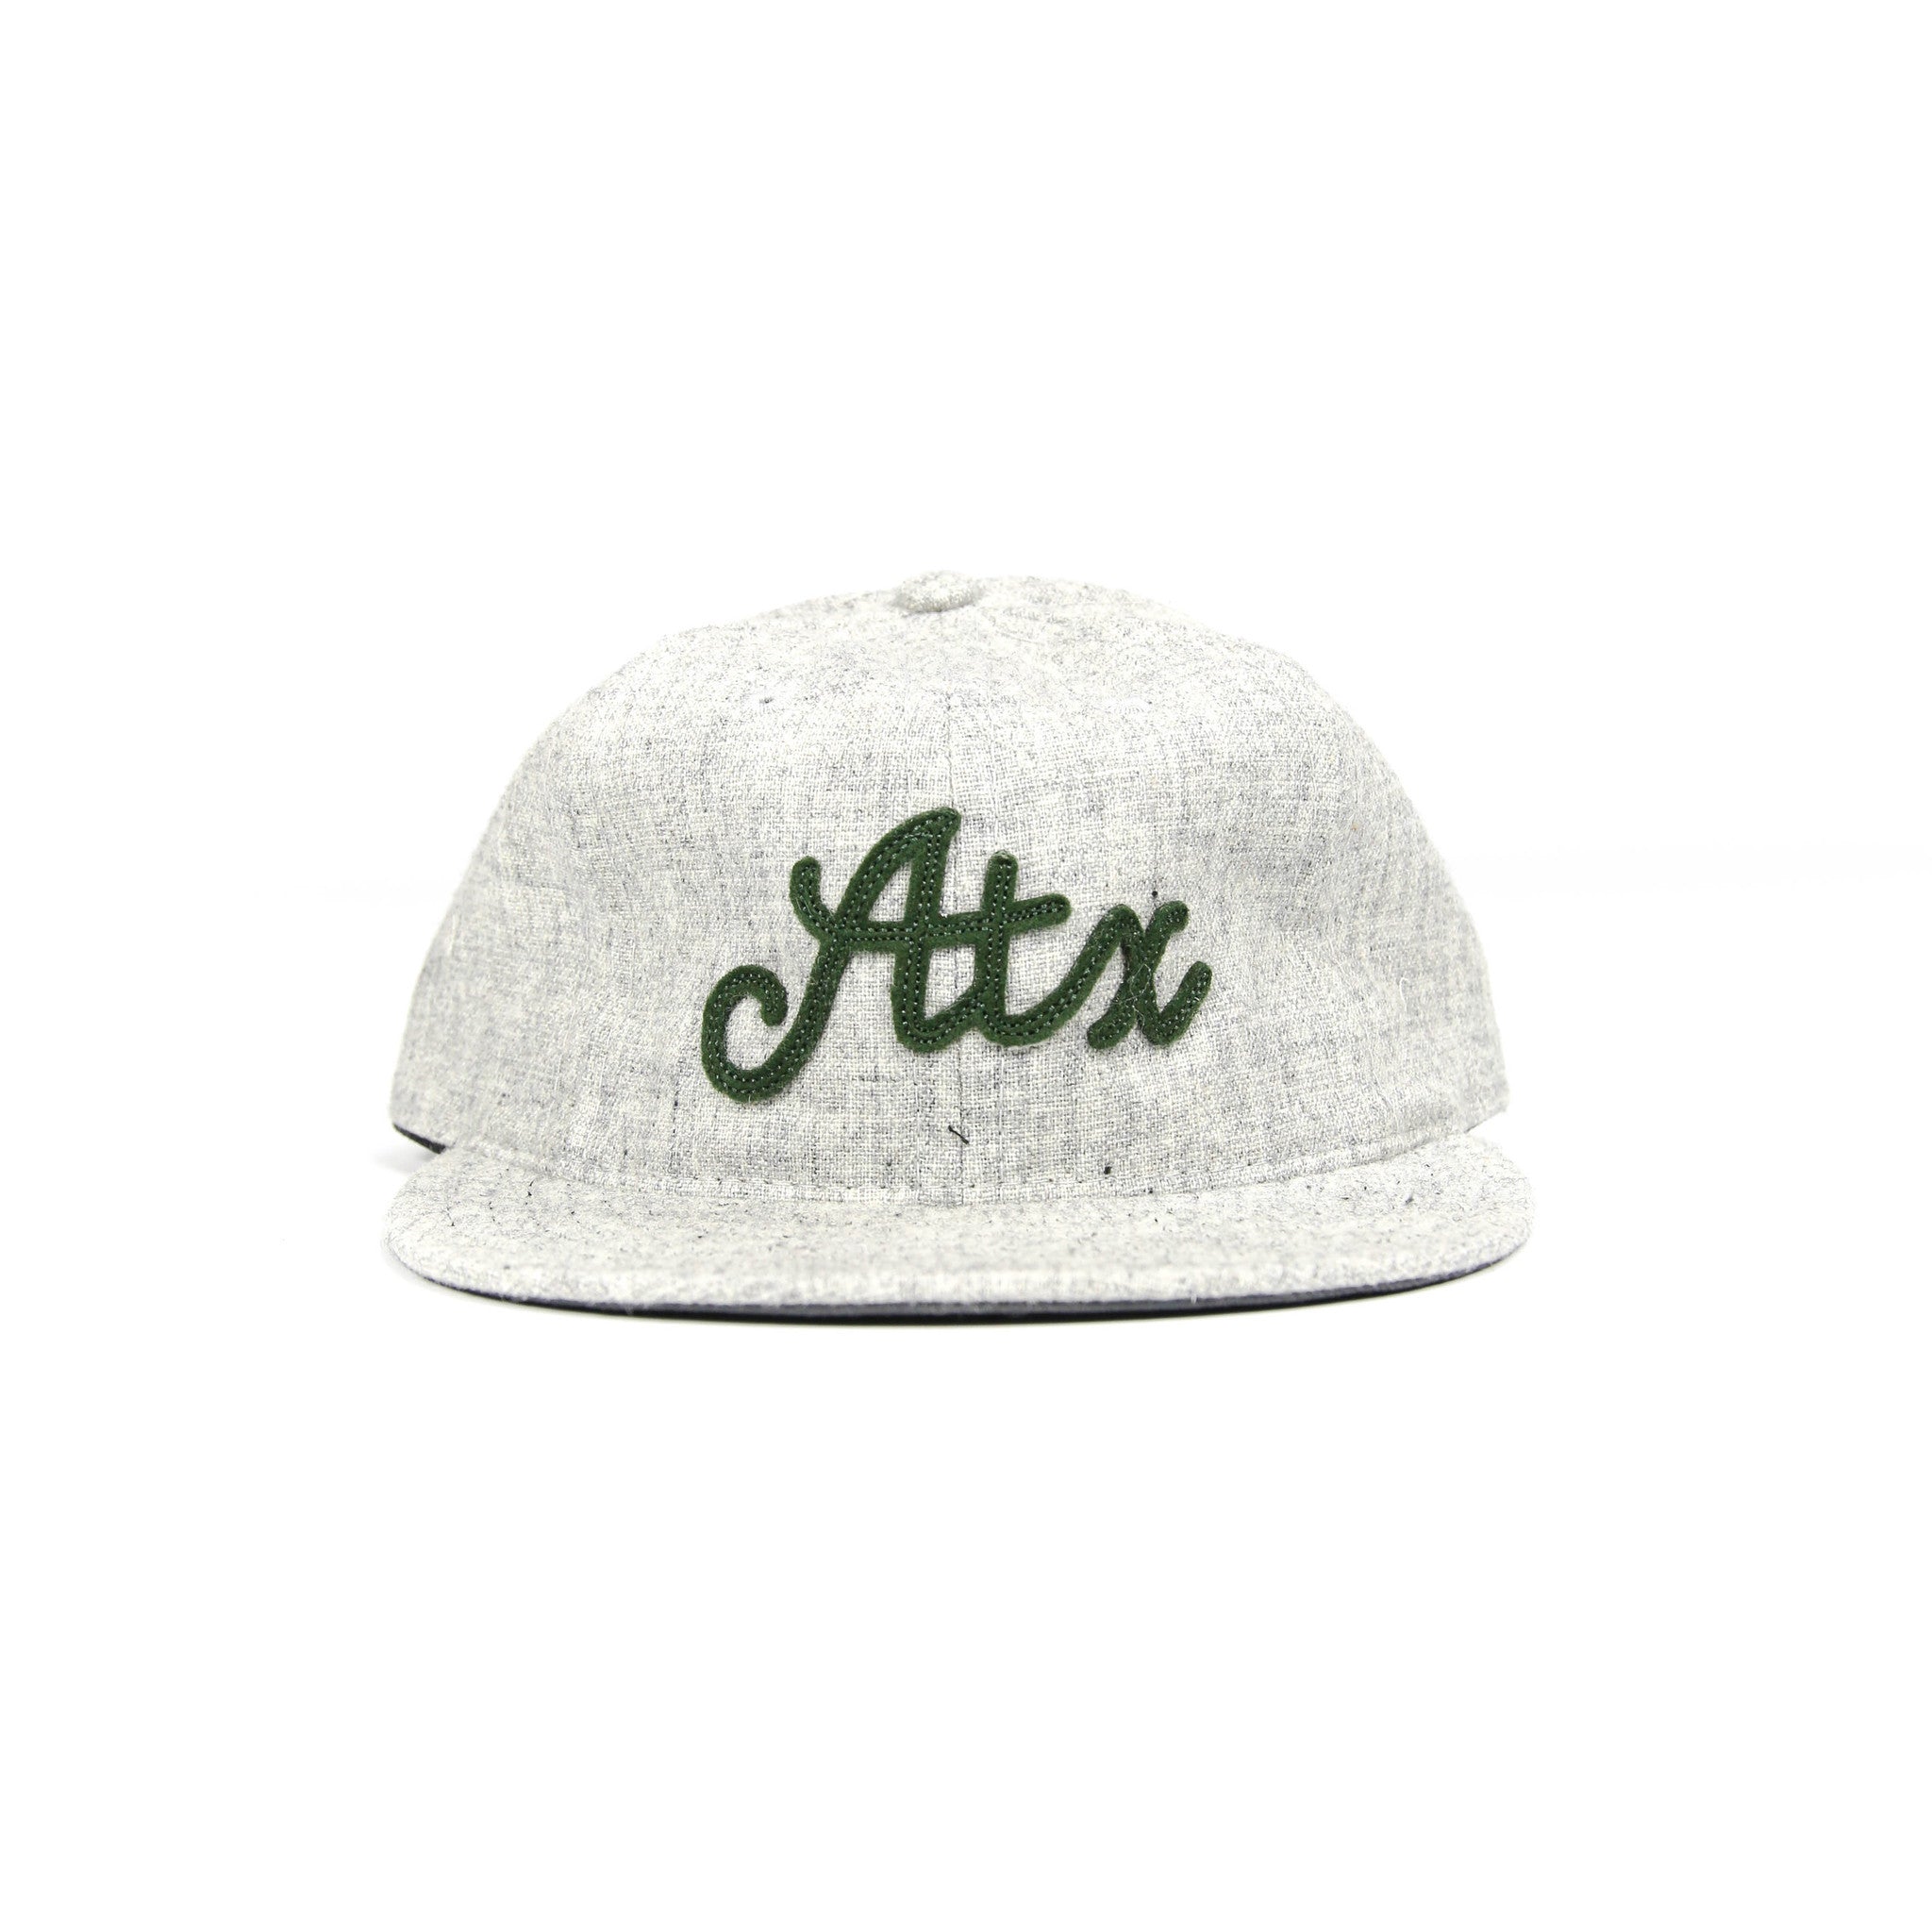 ATX Hat - Gray & Green